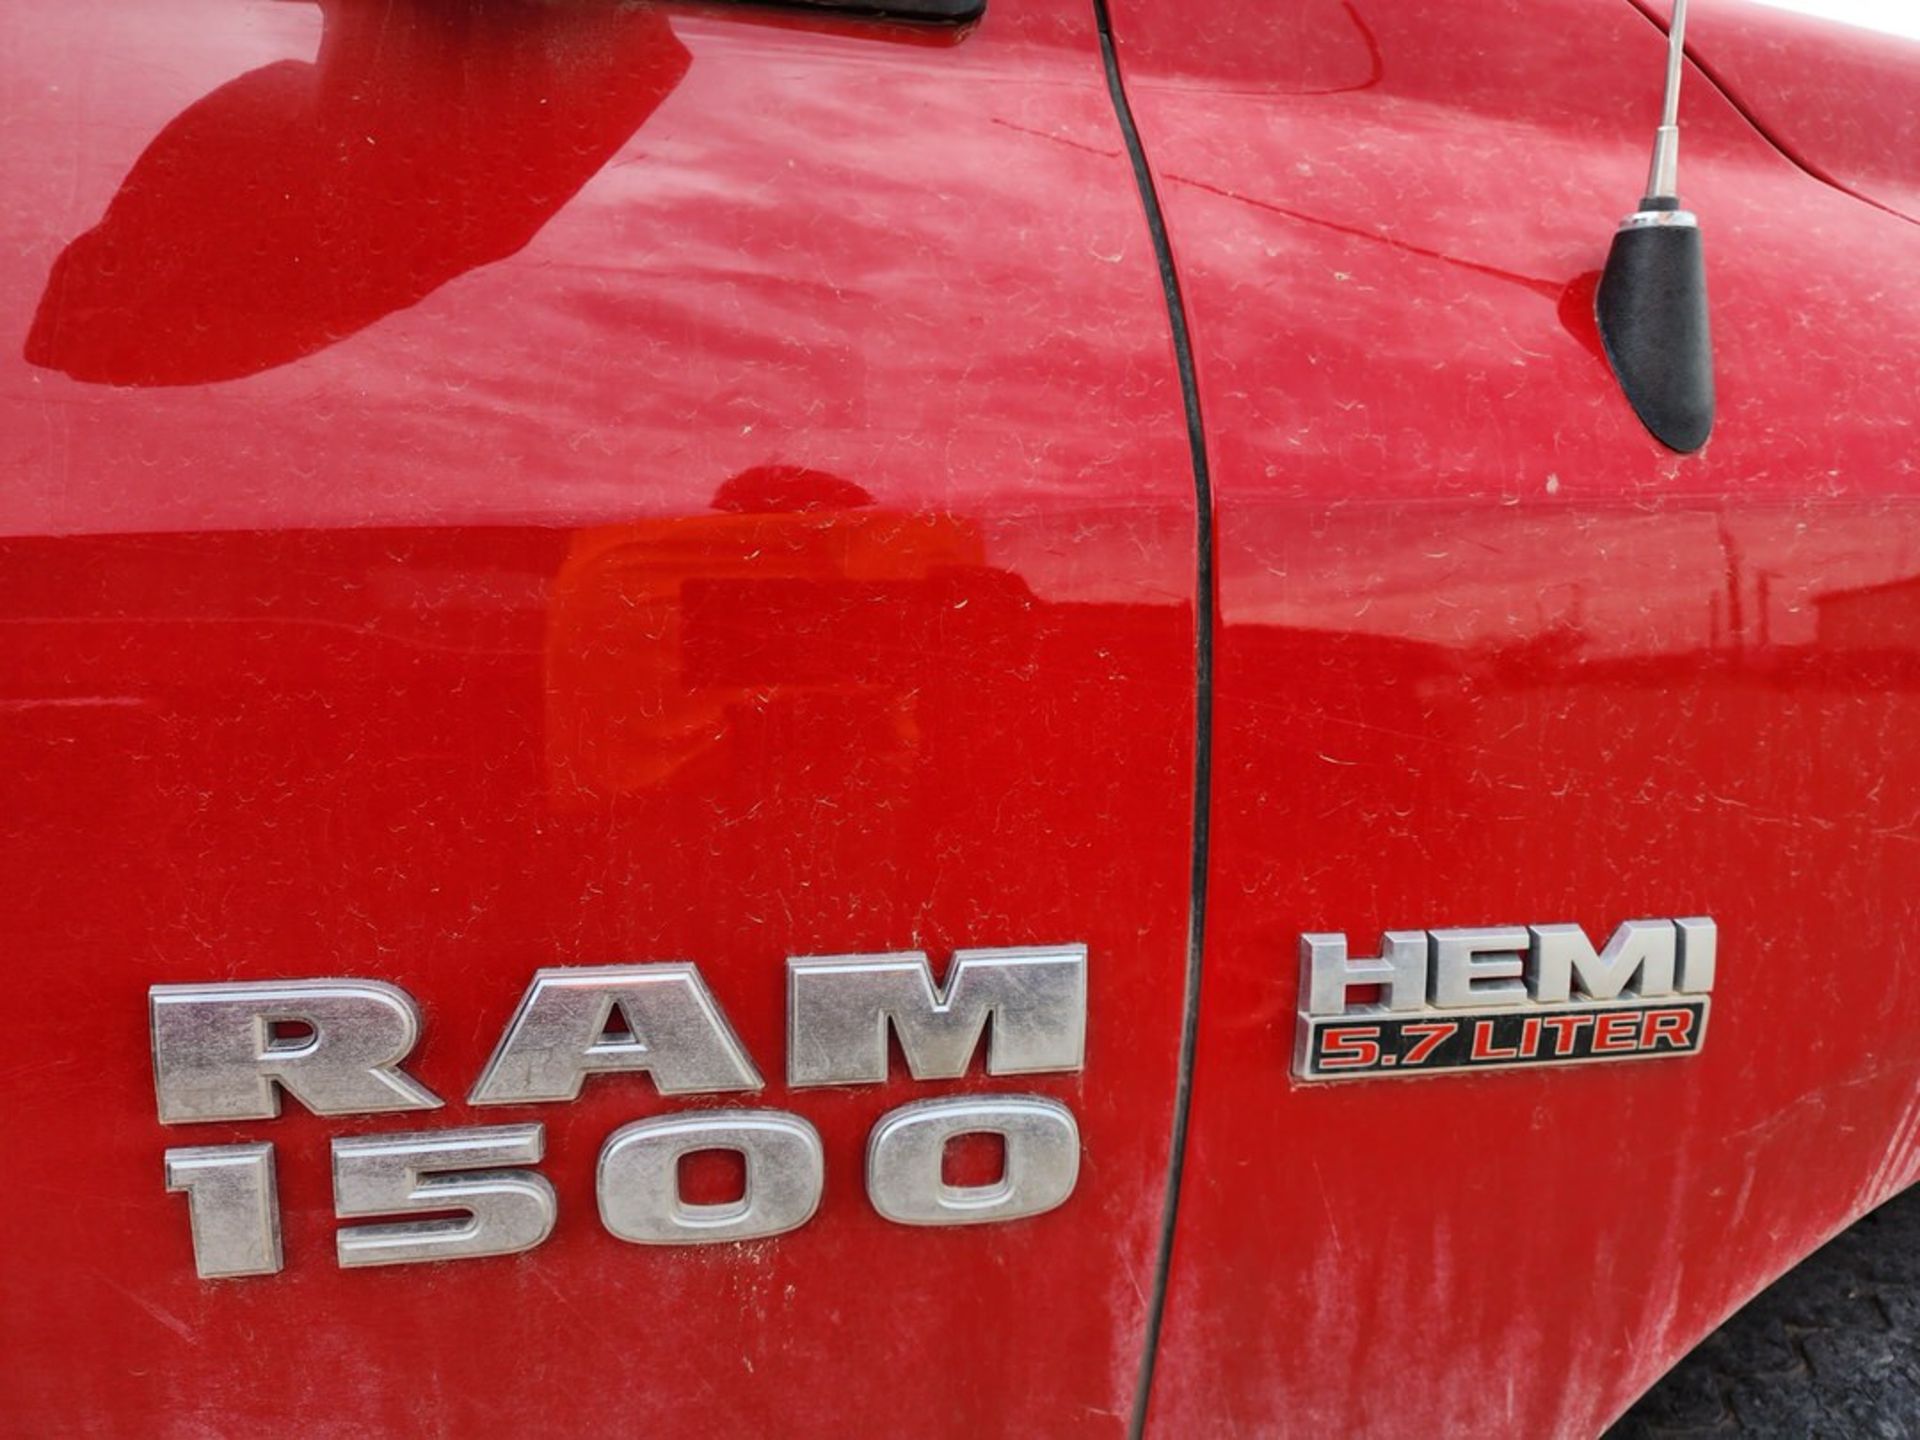 2017 Dodge Ram 1500 Hemi Truck (Gasoline) Mileage: 89,578 ; Vin: 1C6RR7T2HS719480; TX Plate: JXZ- - Image 4 of 19